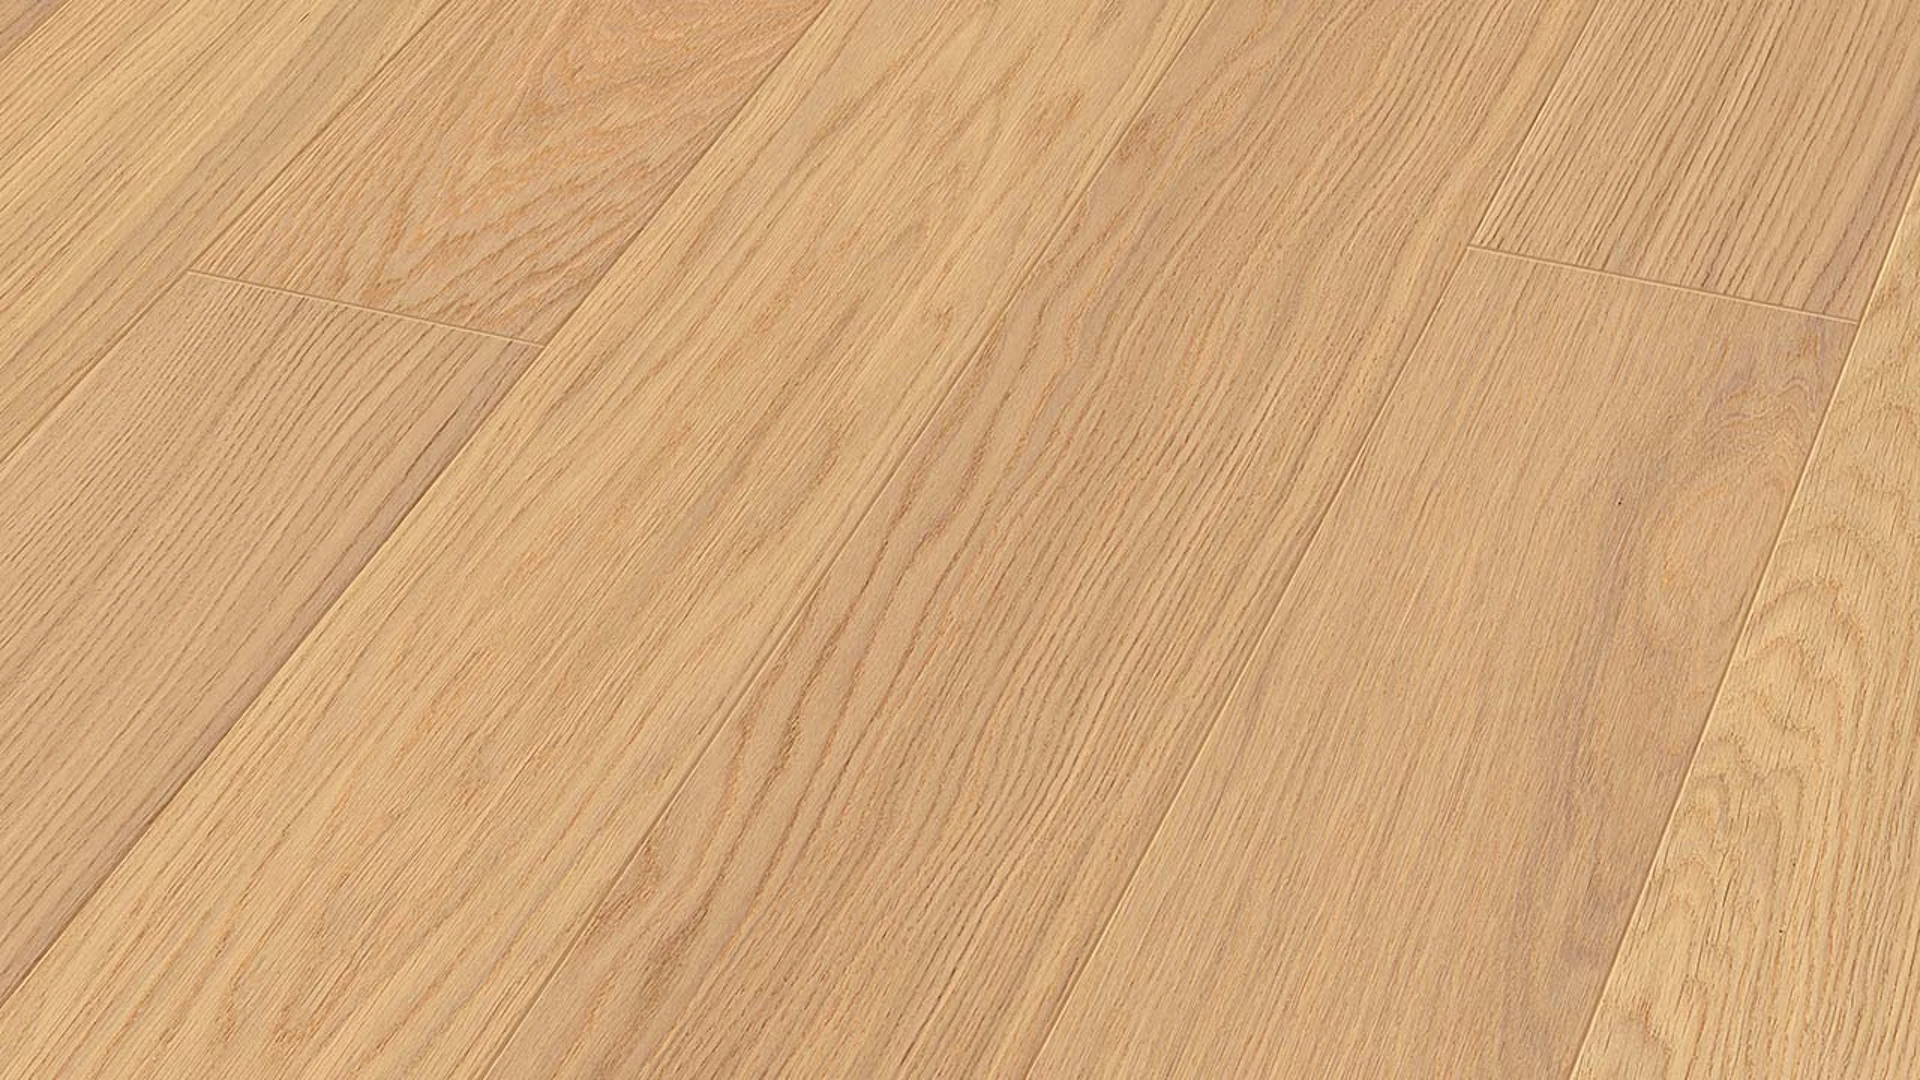 MEISTER Parquet Flooring - Longlife PD 400 Pure harmonious oak (500006-2200180-09013)